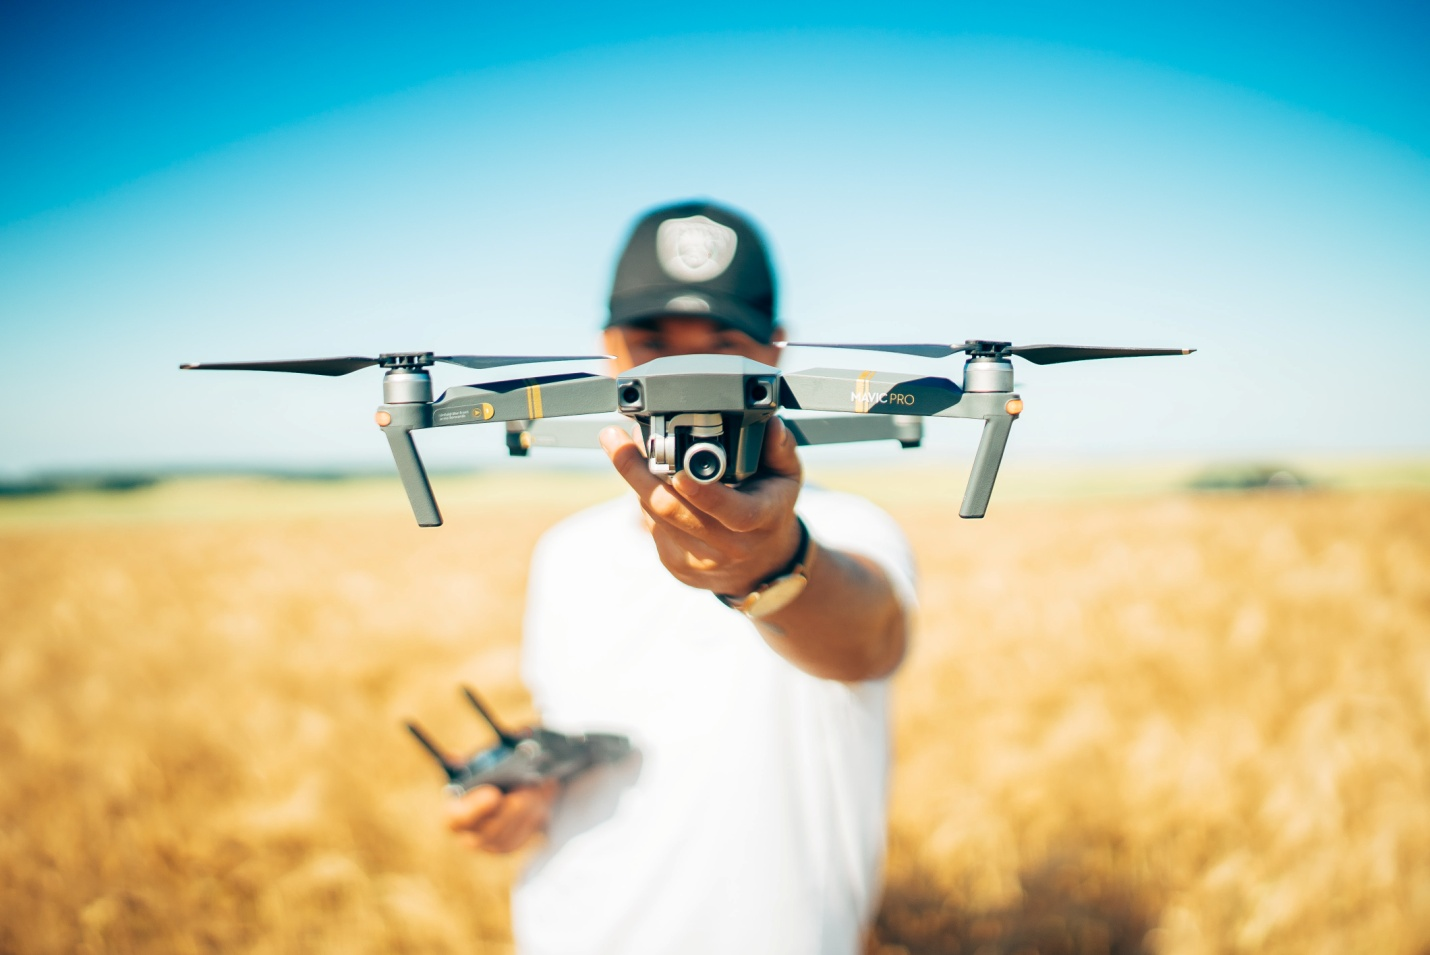 A cameraman holding a camera drone